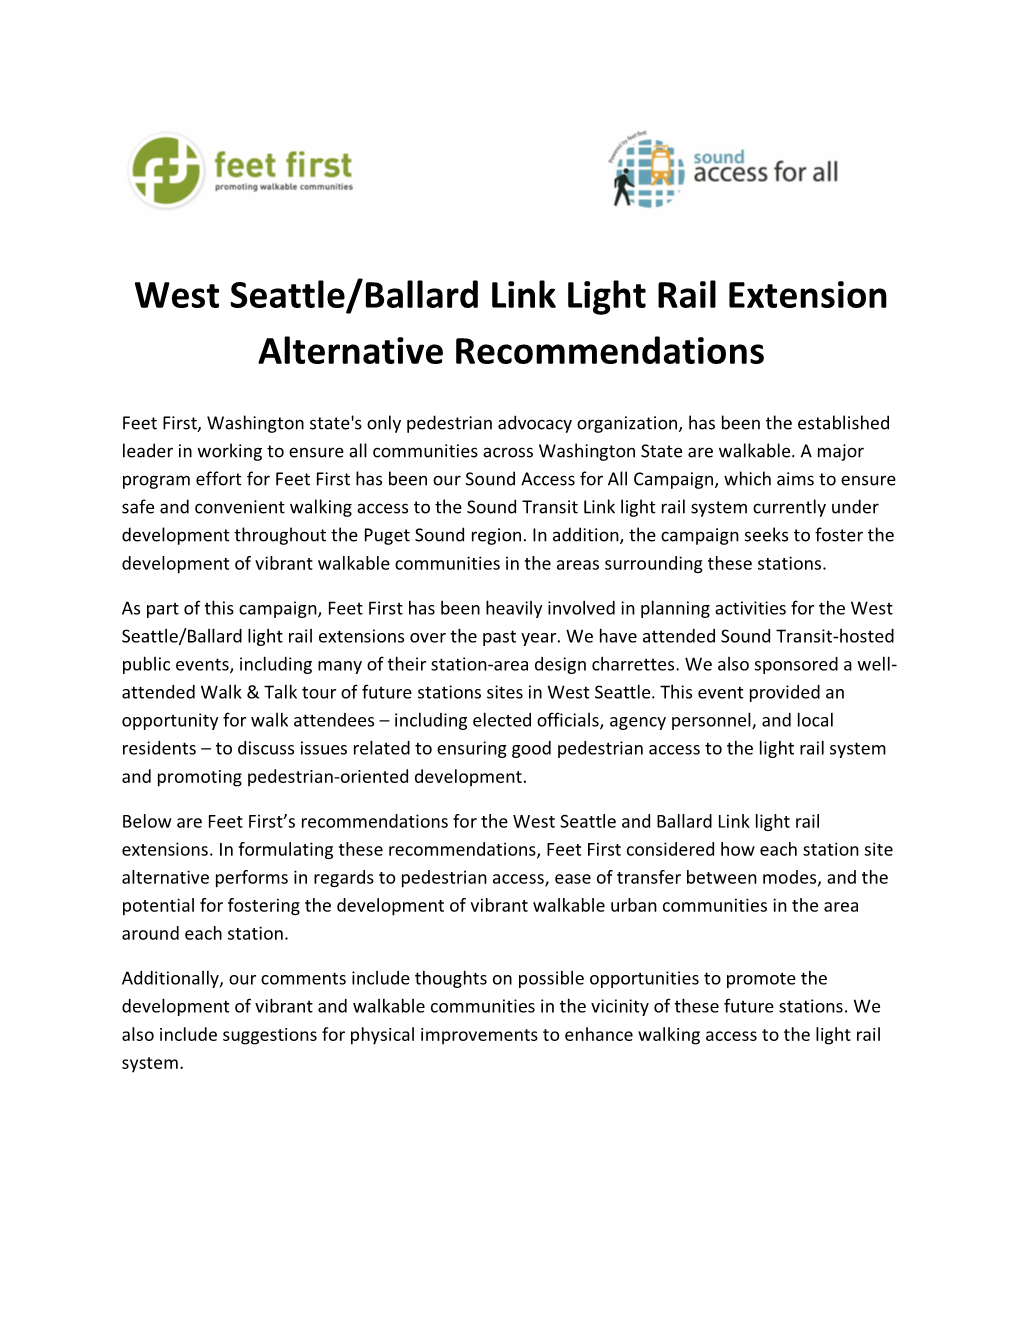 West Seattle/Ballard Link Light Rail Extension Alternative Recommendations